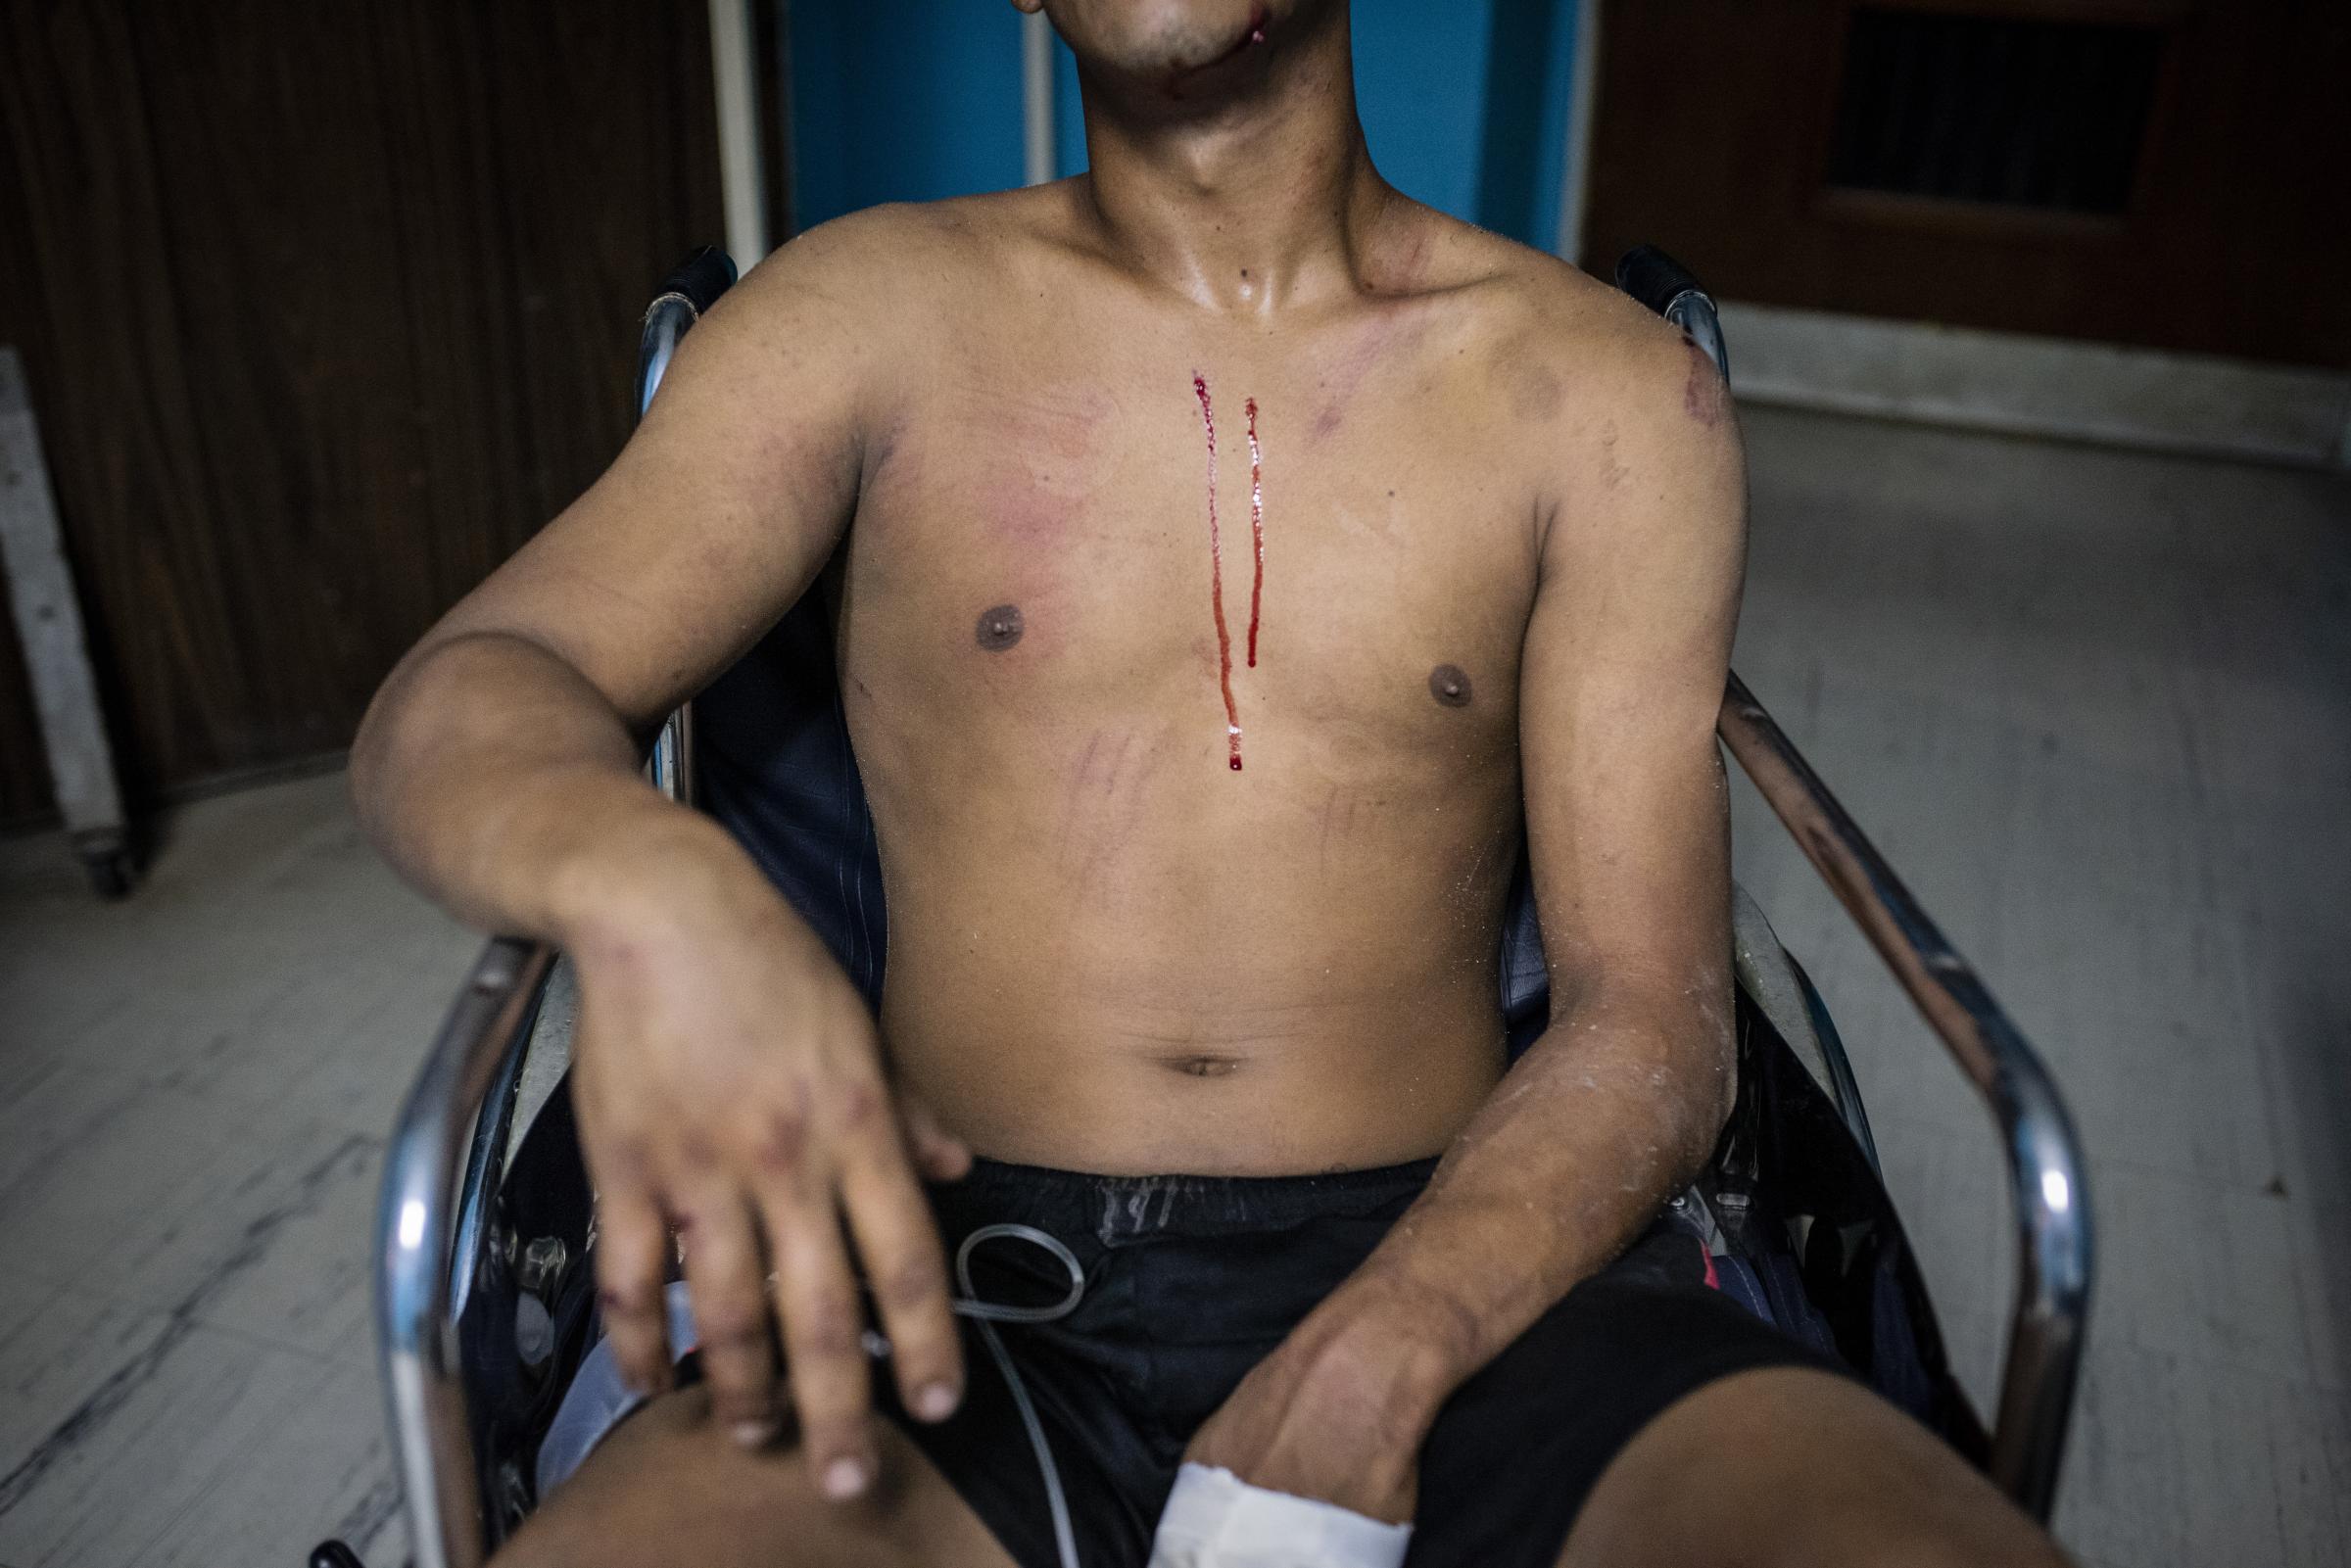 Venezuela / Between violence and justice